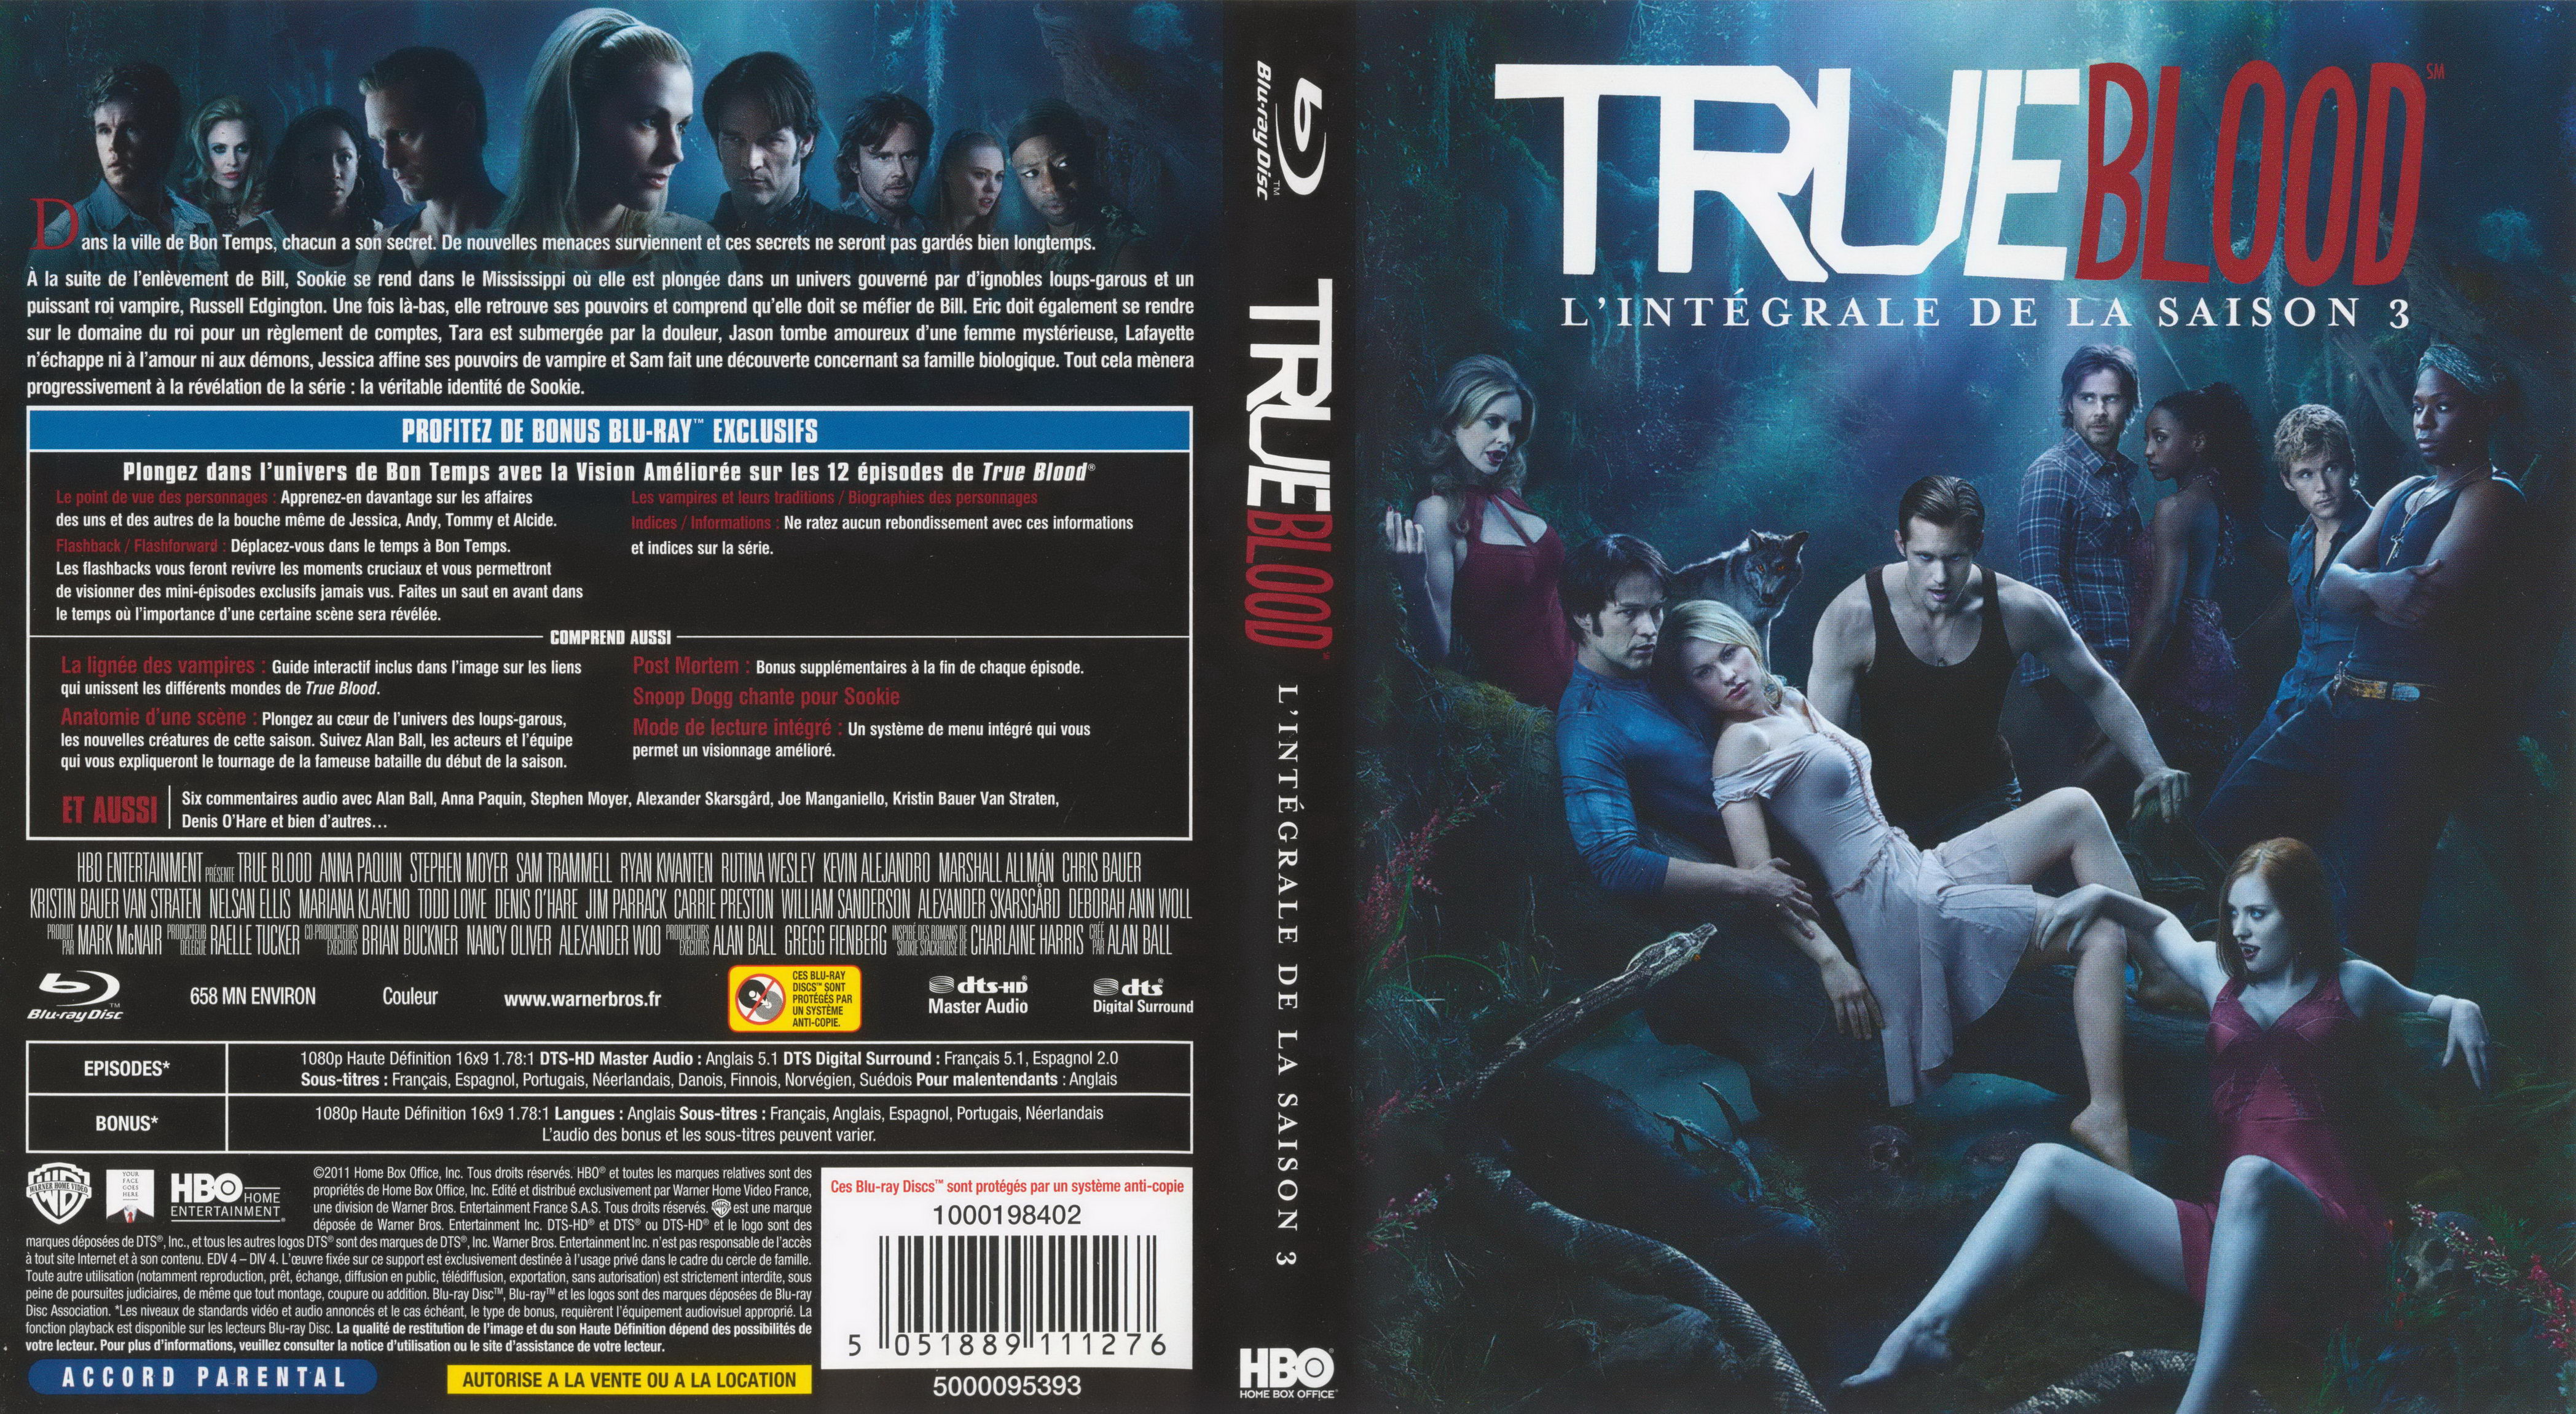 Jaquette DVD True blood saison 3 (BLU-RAY)